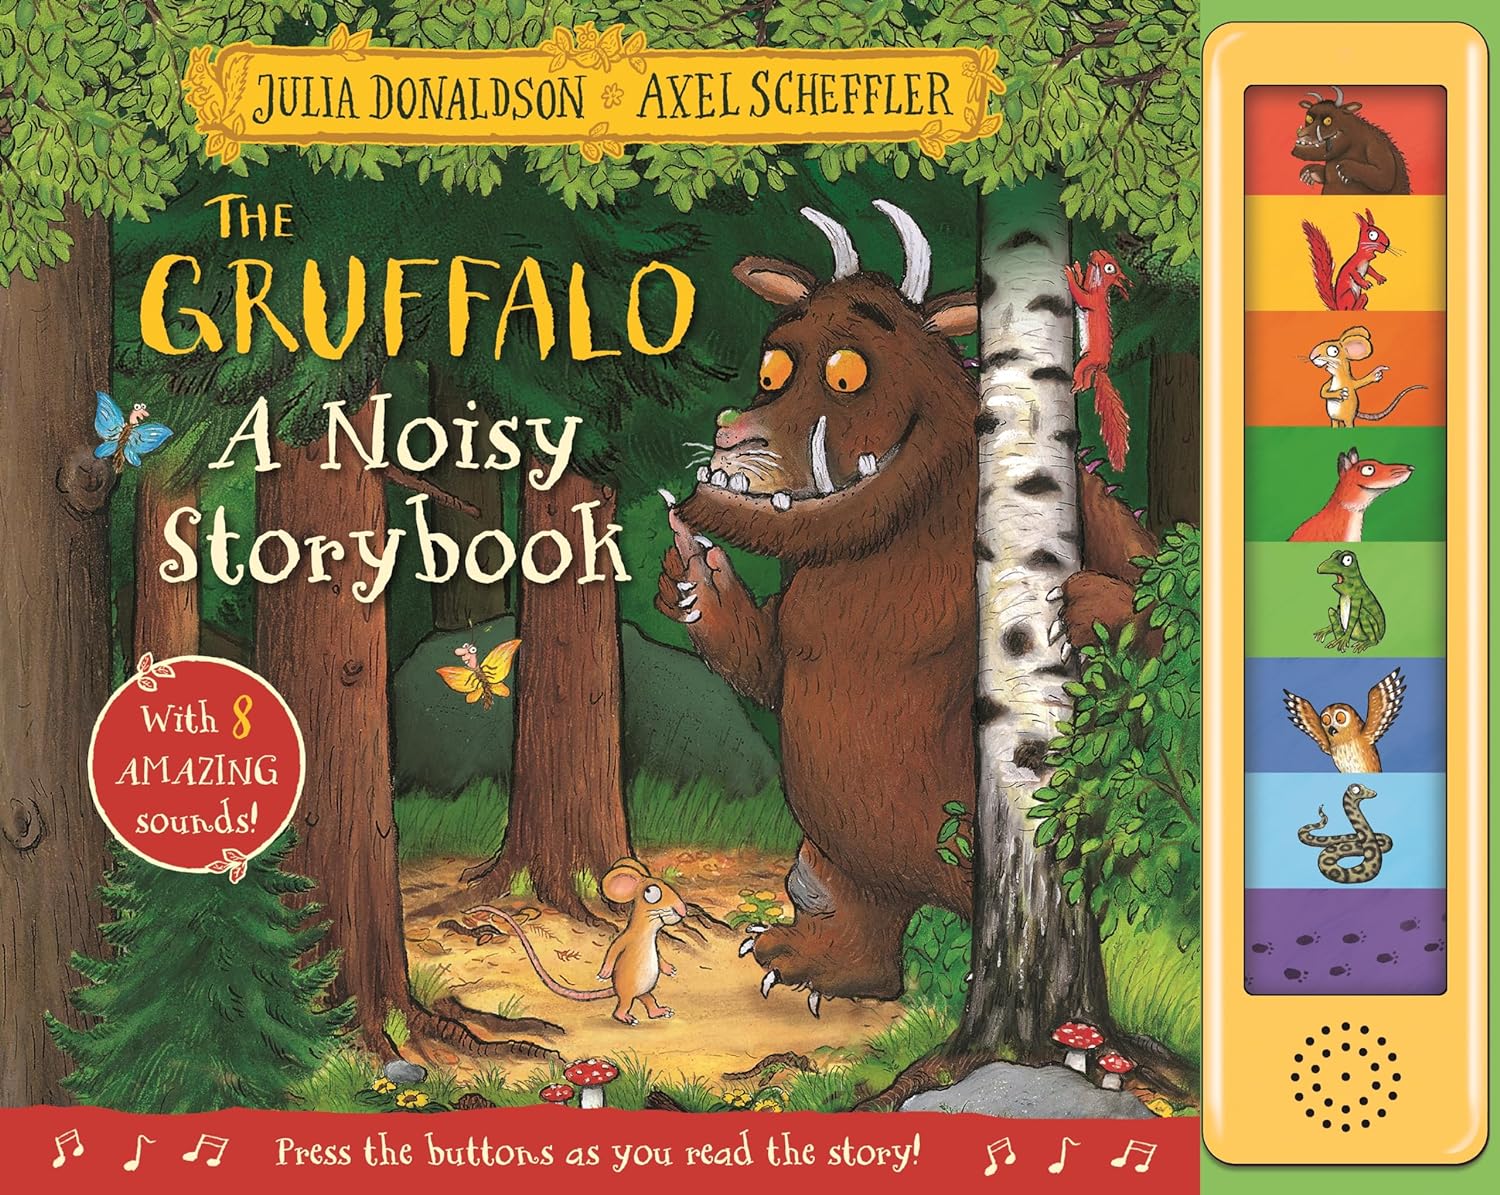 The Gruffalo: A Noisy Storybook (8 Amazing Sounds!)